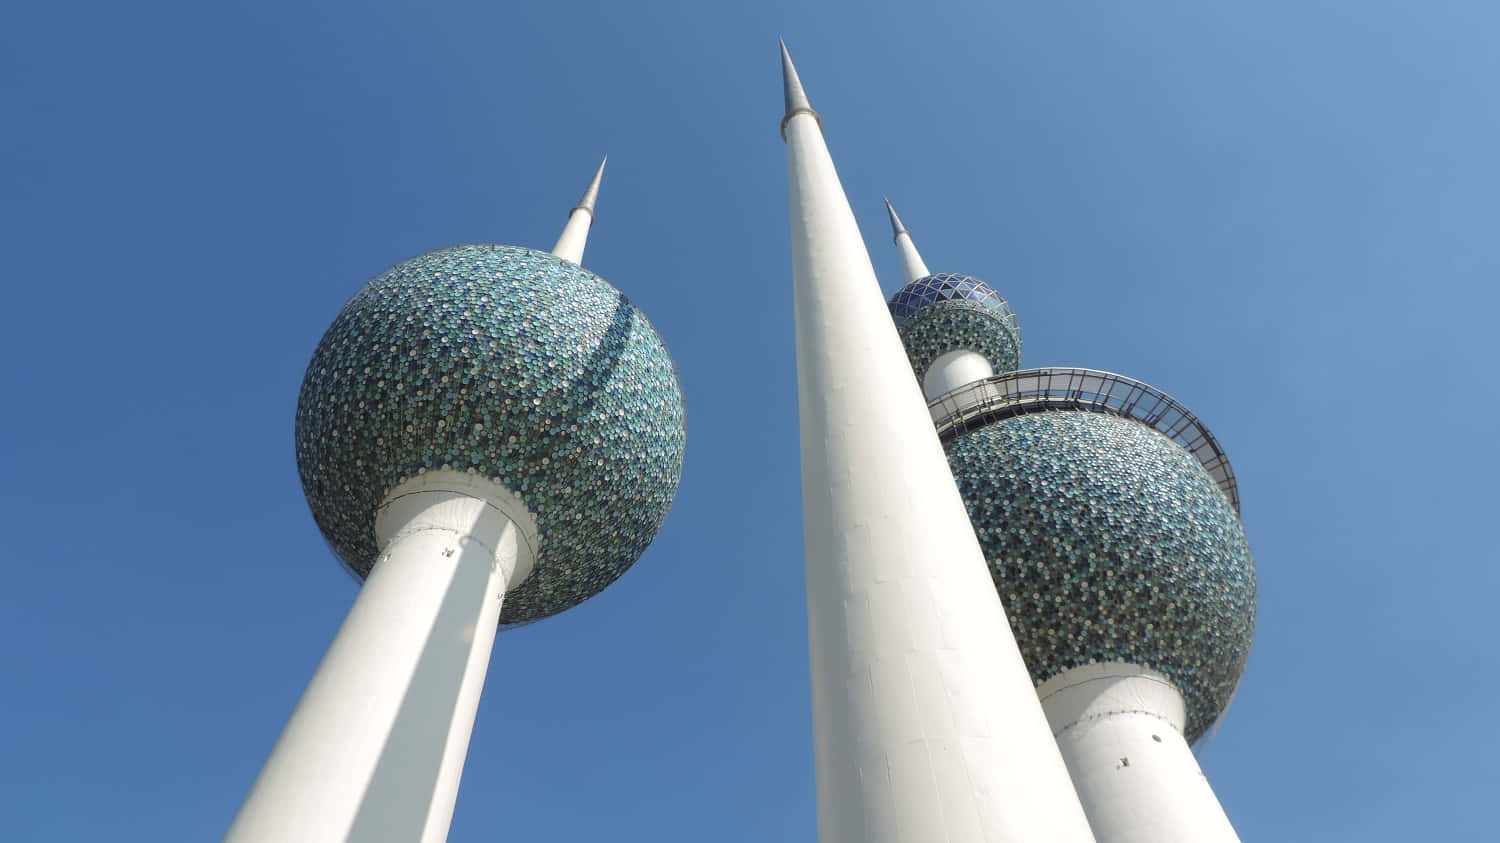 Caption: Landmark Kuwait Towers Standing Majestically Under A Clear Blue Sky Wallpaper